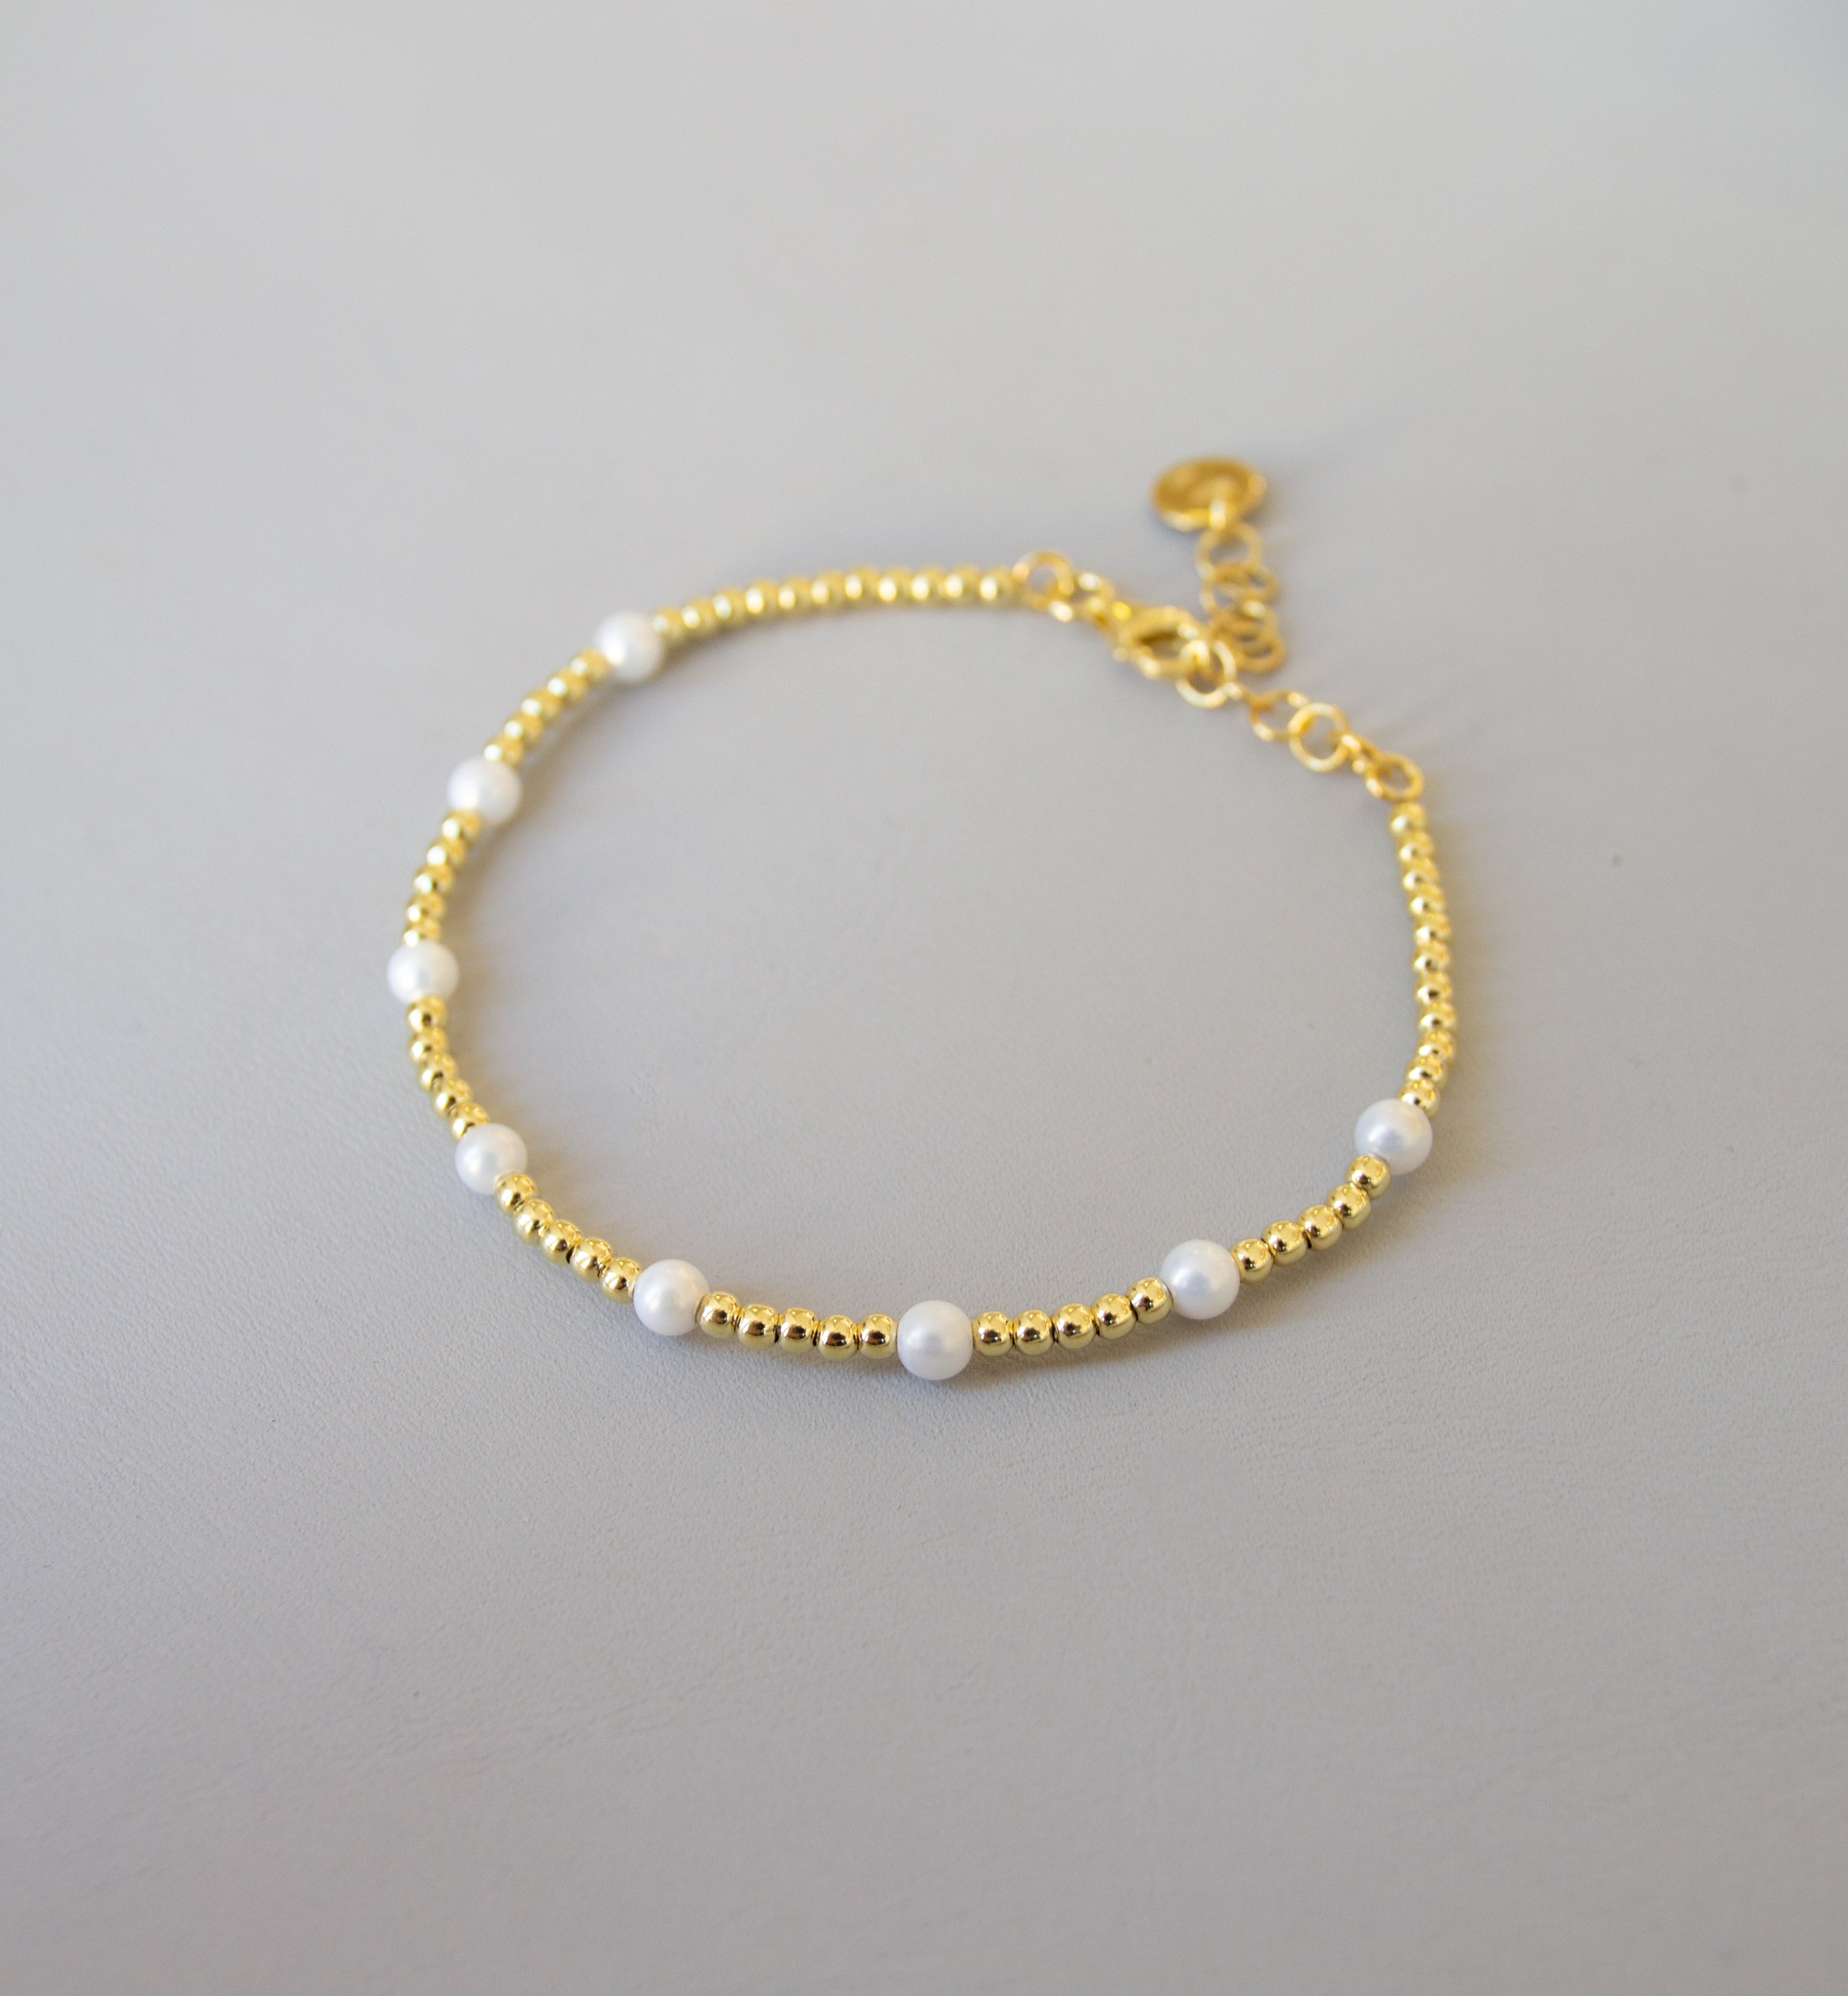 Silver 925 FW Cultured Pearl Bracelet